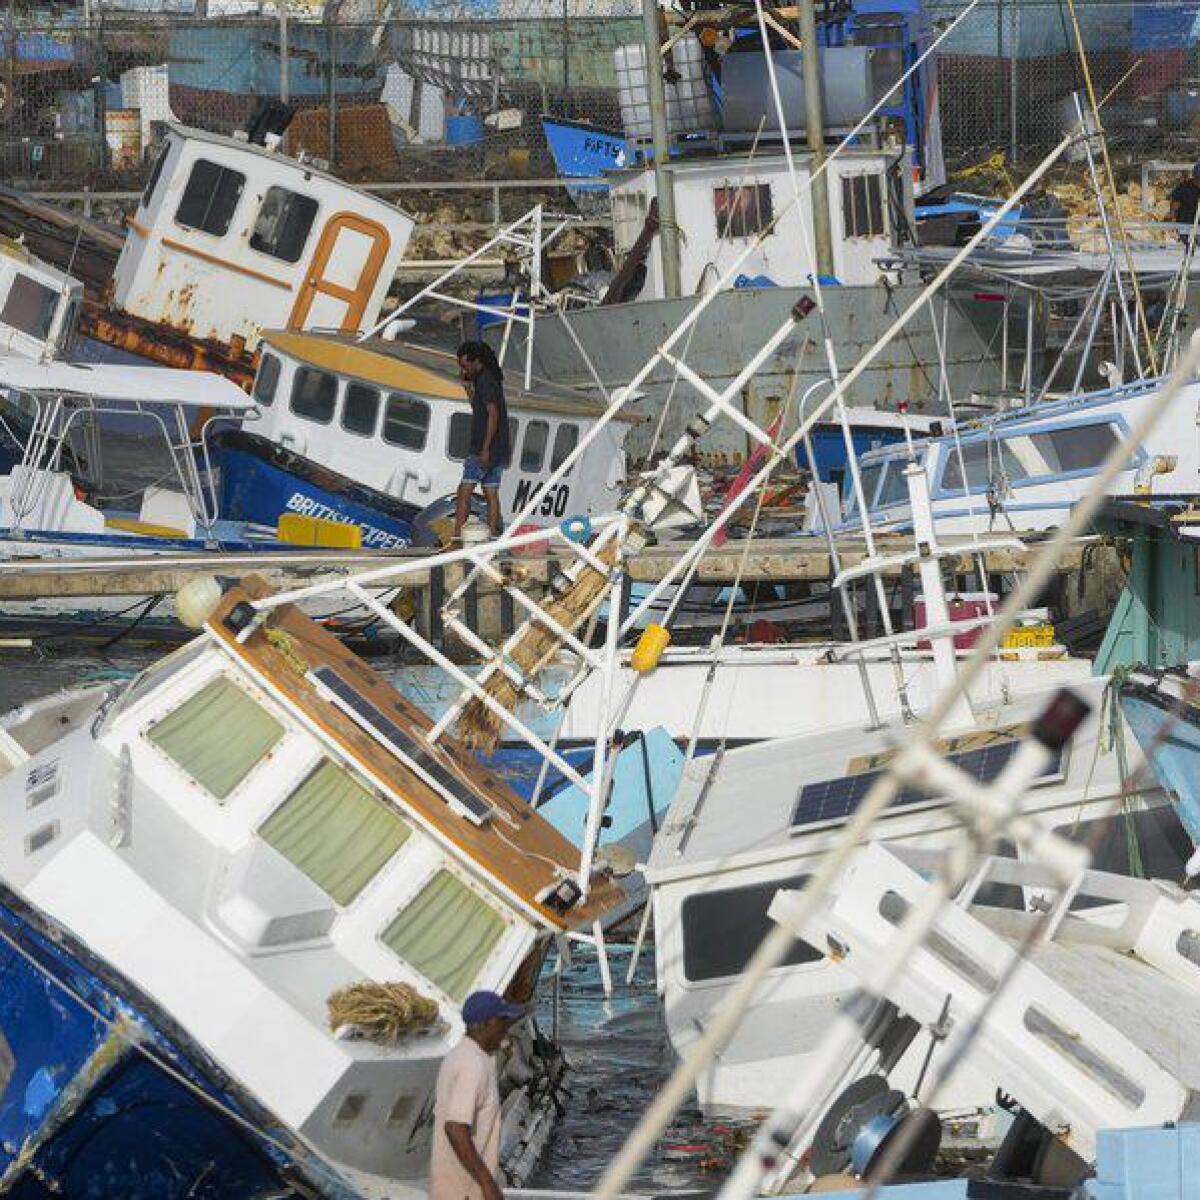 Fishing vessels damaged by Hurricane Beryl in Barbados